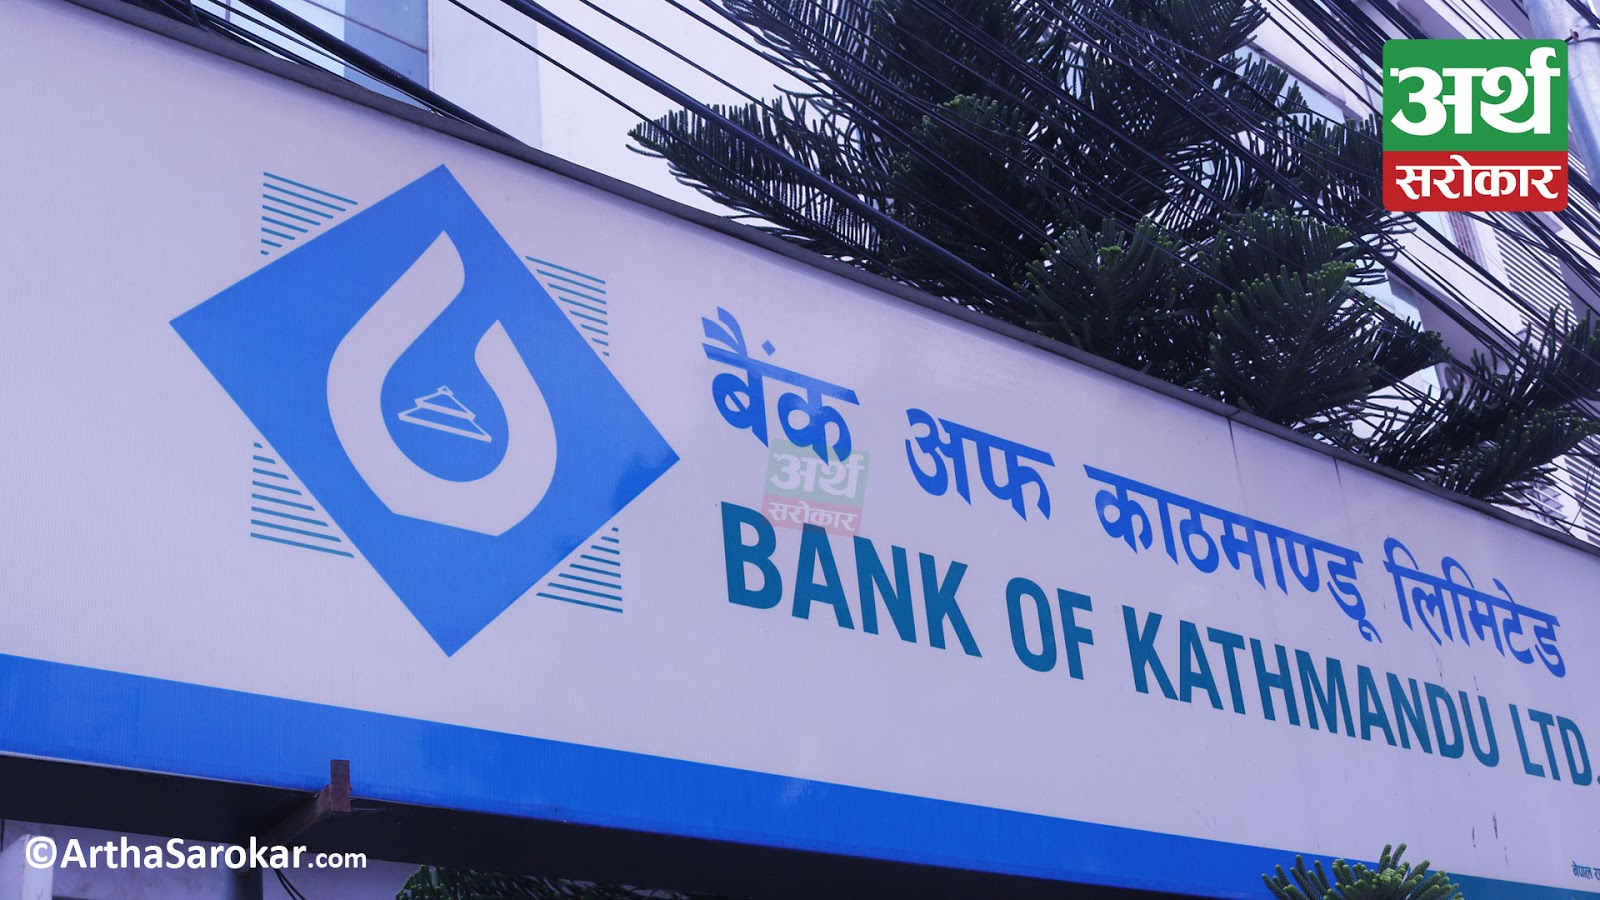 Bank of Kathmandu’s bonus shares are listed on the Nepal Stock Exchange